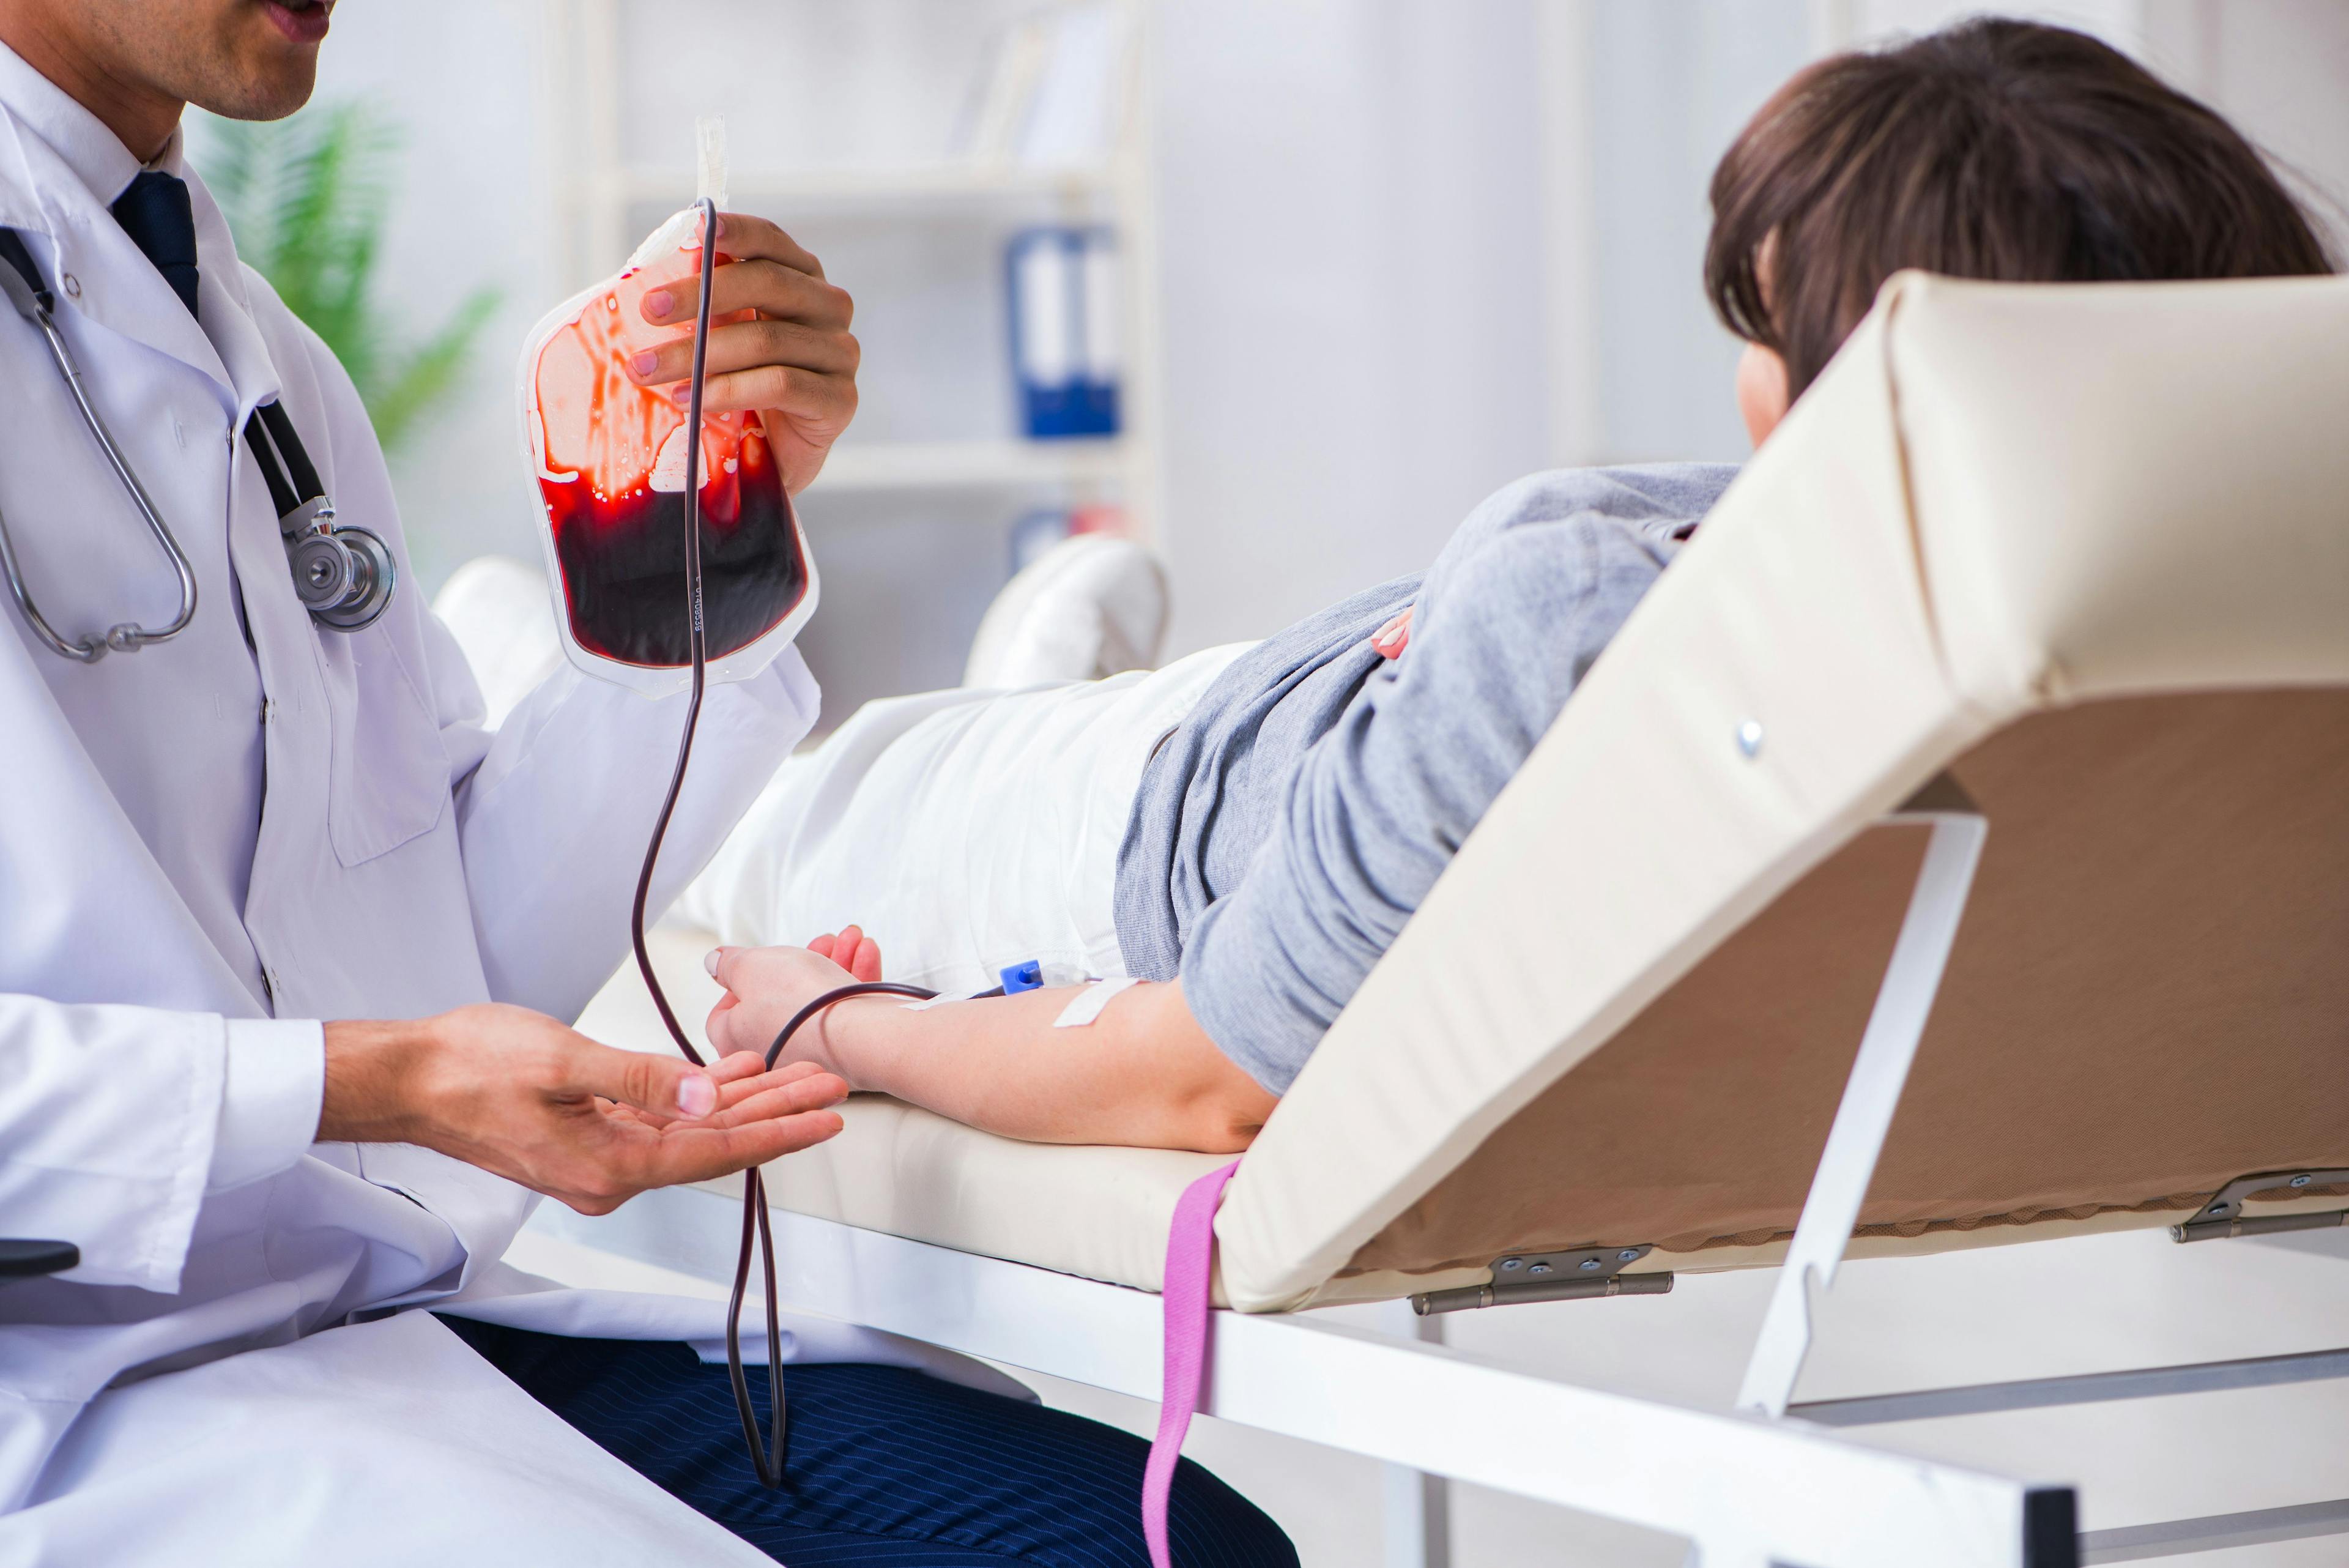 Patient Receiving Blood Transfusion | Elnur - stock.adobe.com